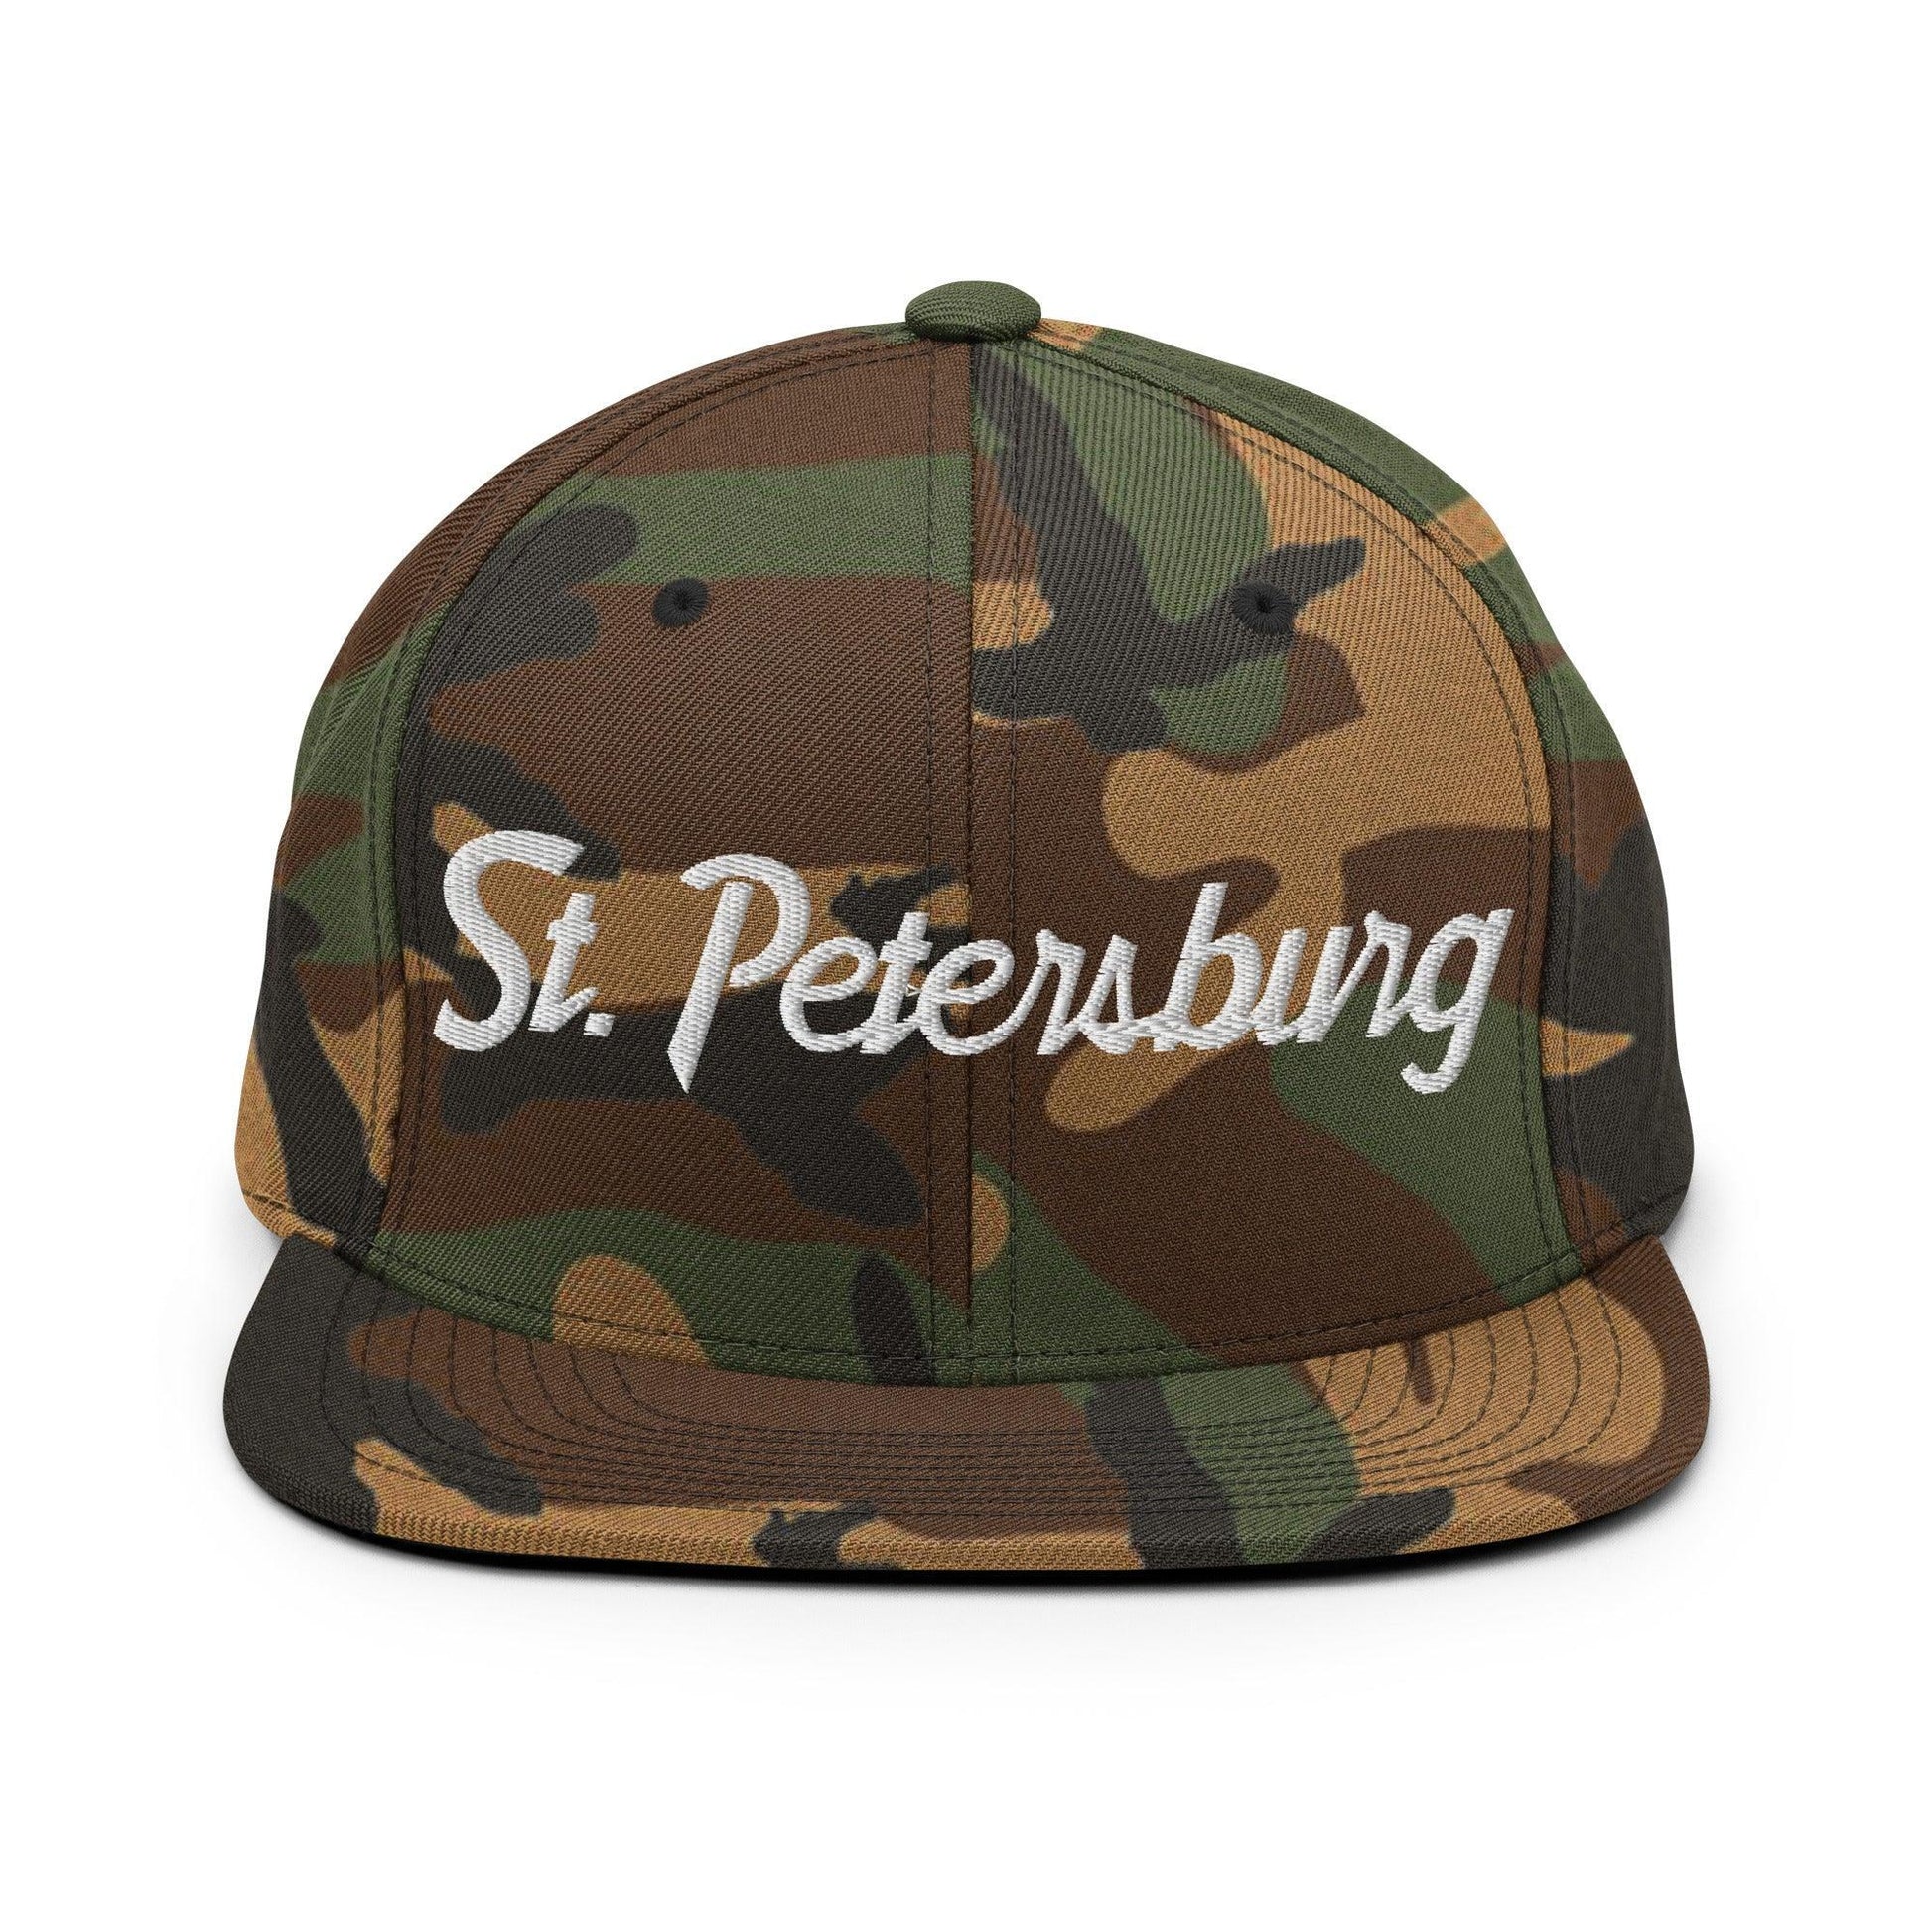 St. Petersburg Script Snapback Hat Green Camo